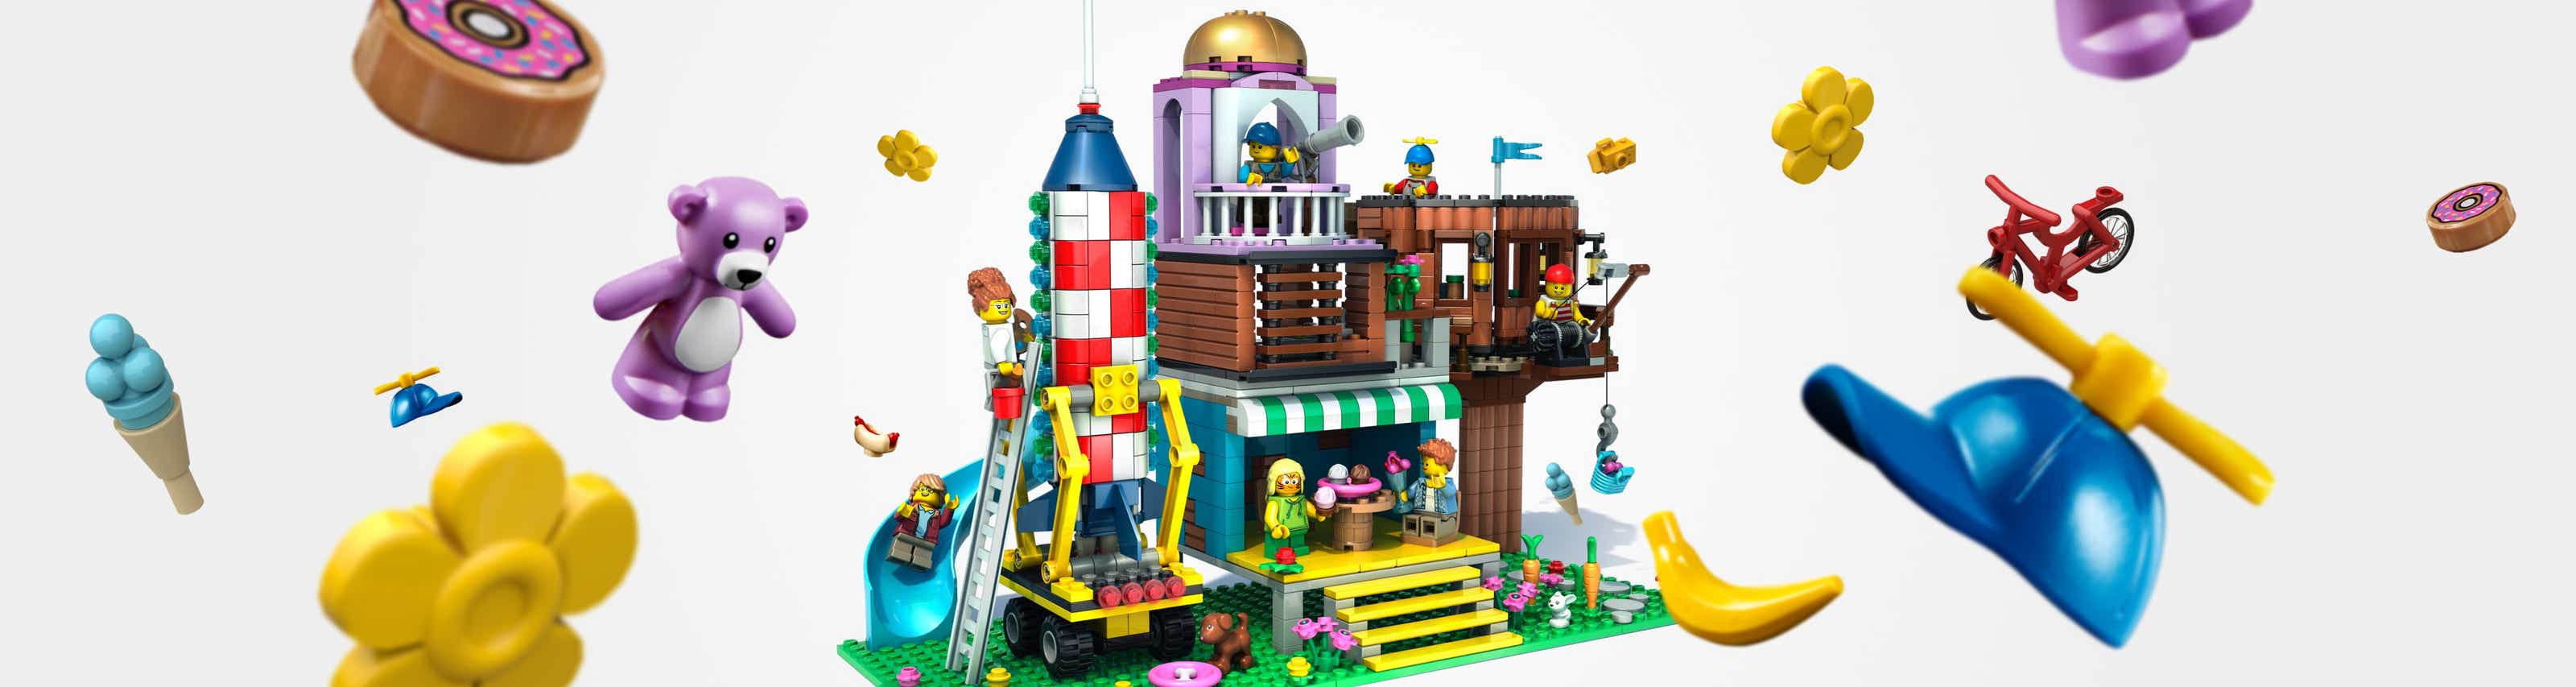 Children - Sustainability - About us - LEGO.com NL